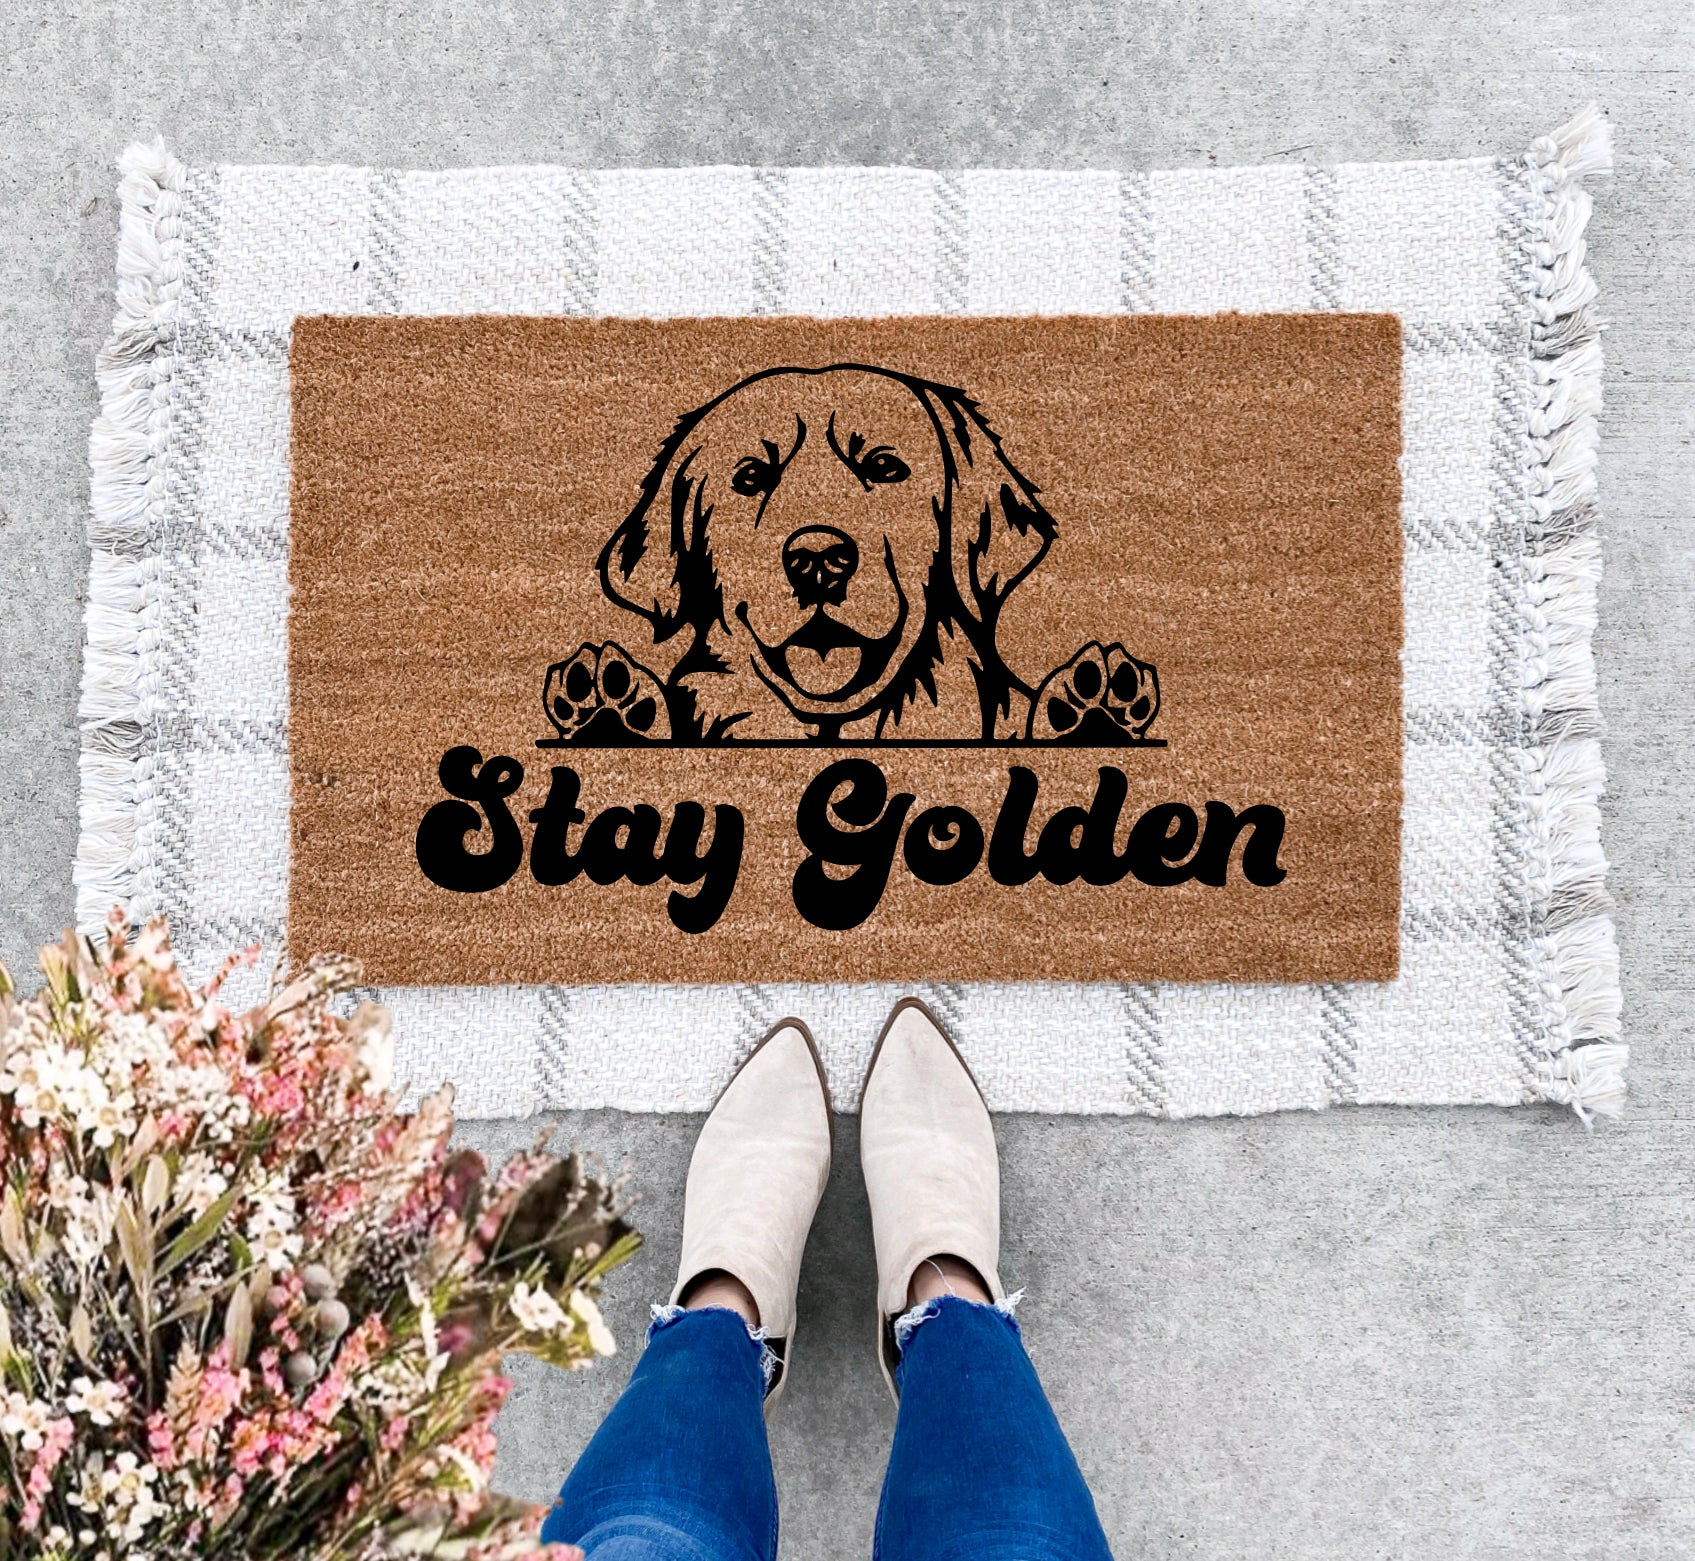 Stay Golden  The Doormat Company